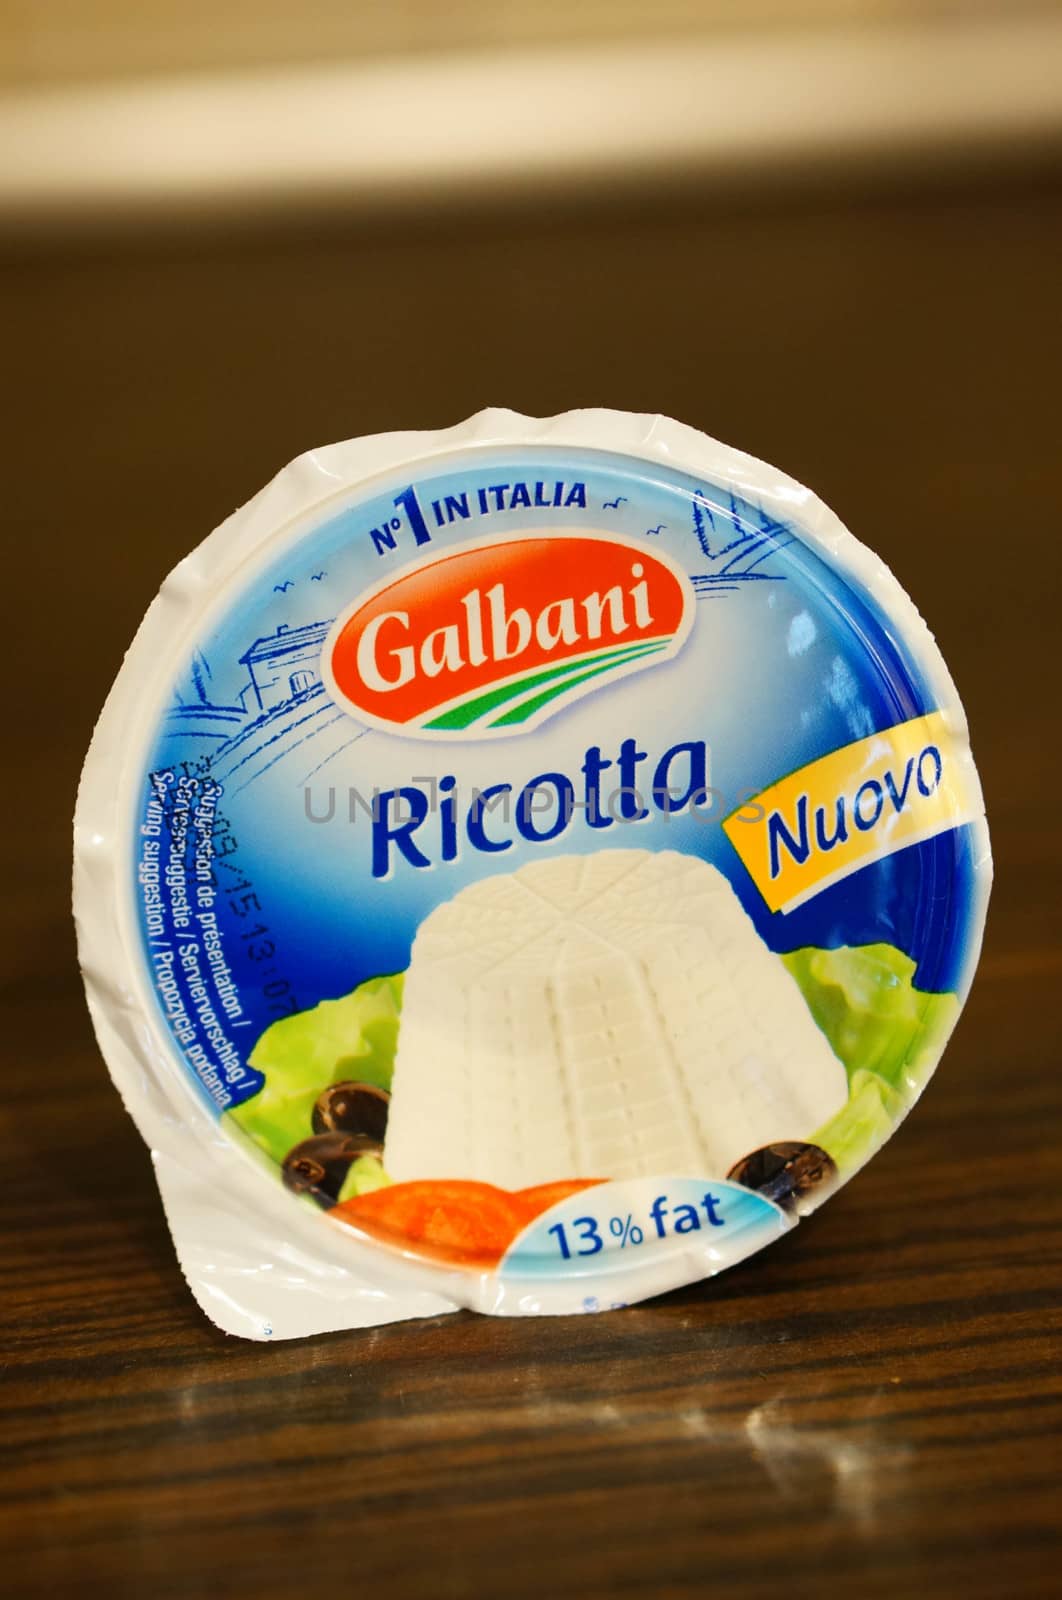 POZNAN, POLAND - SEPTEMBER 24, 2015: Pack of Italina Galbani ricotta cheese